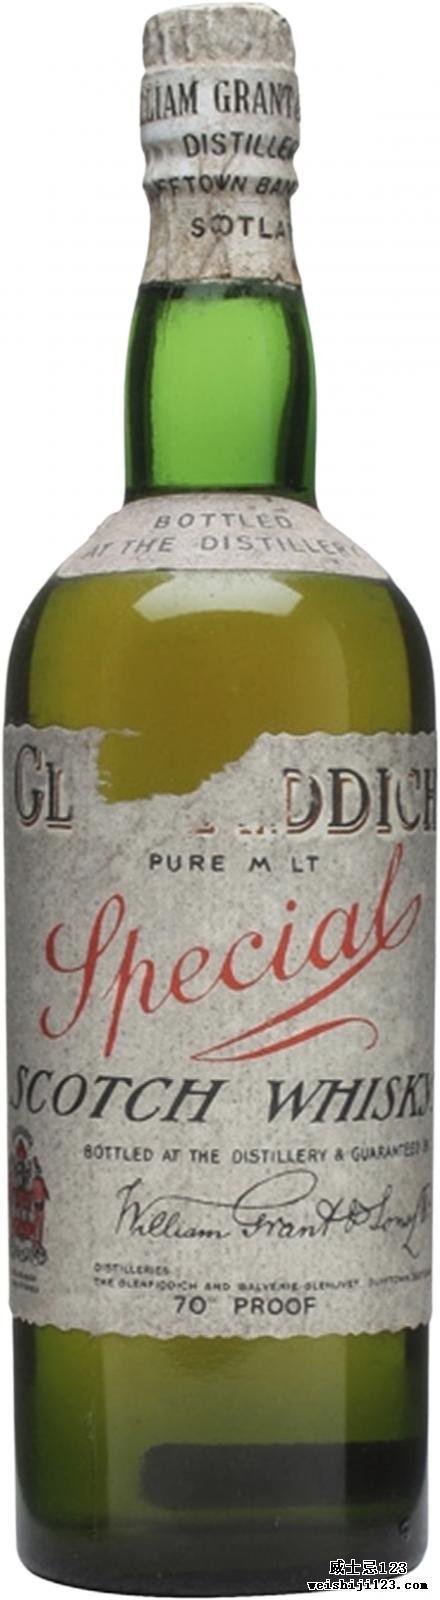 Glenfiddich Special Pure Malt